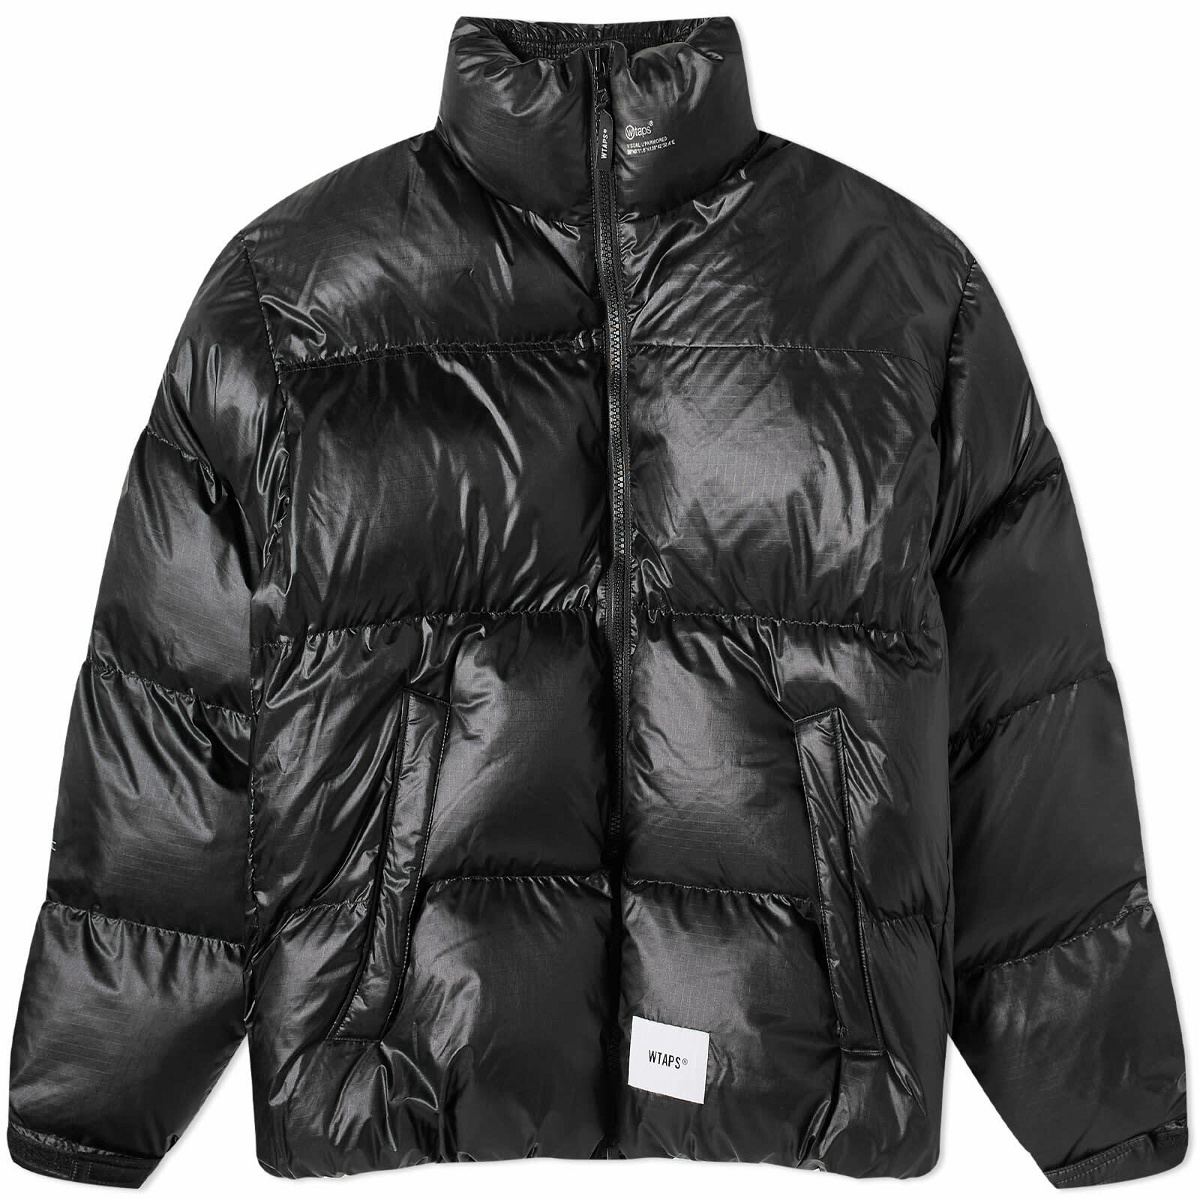 Wtaps chief jacket black size 02 - ジャケット・アウター